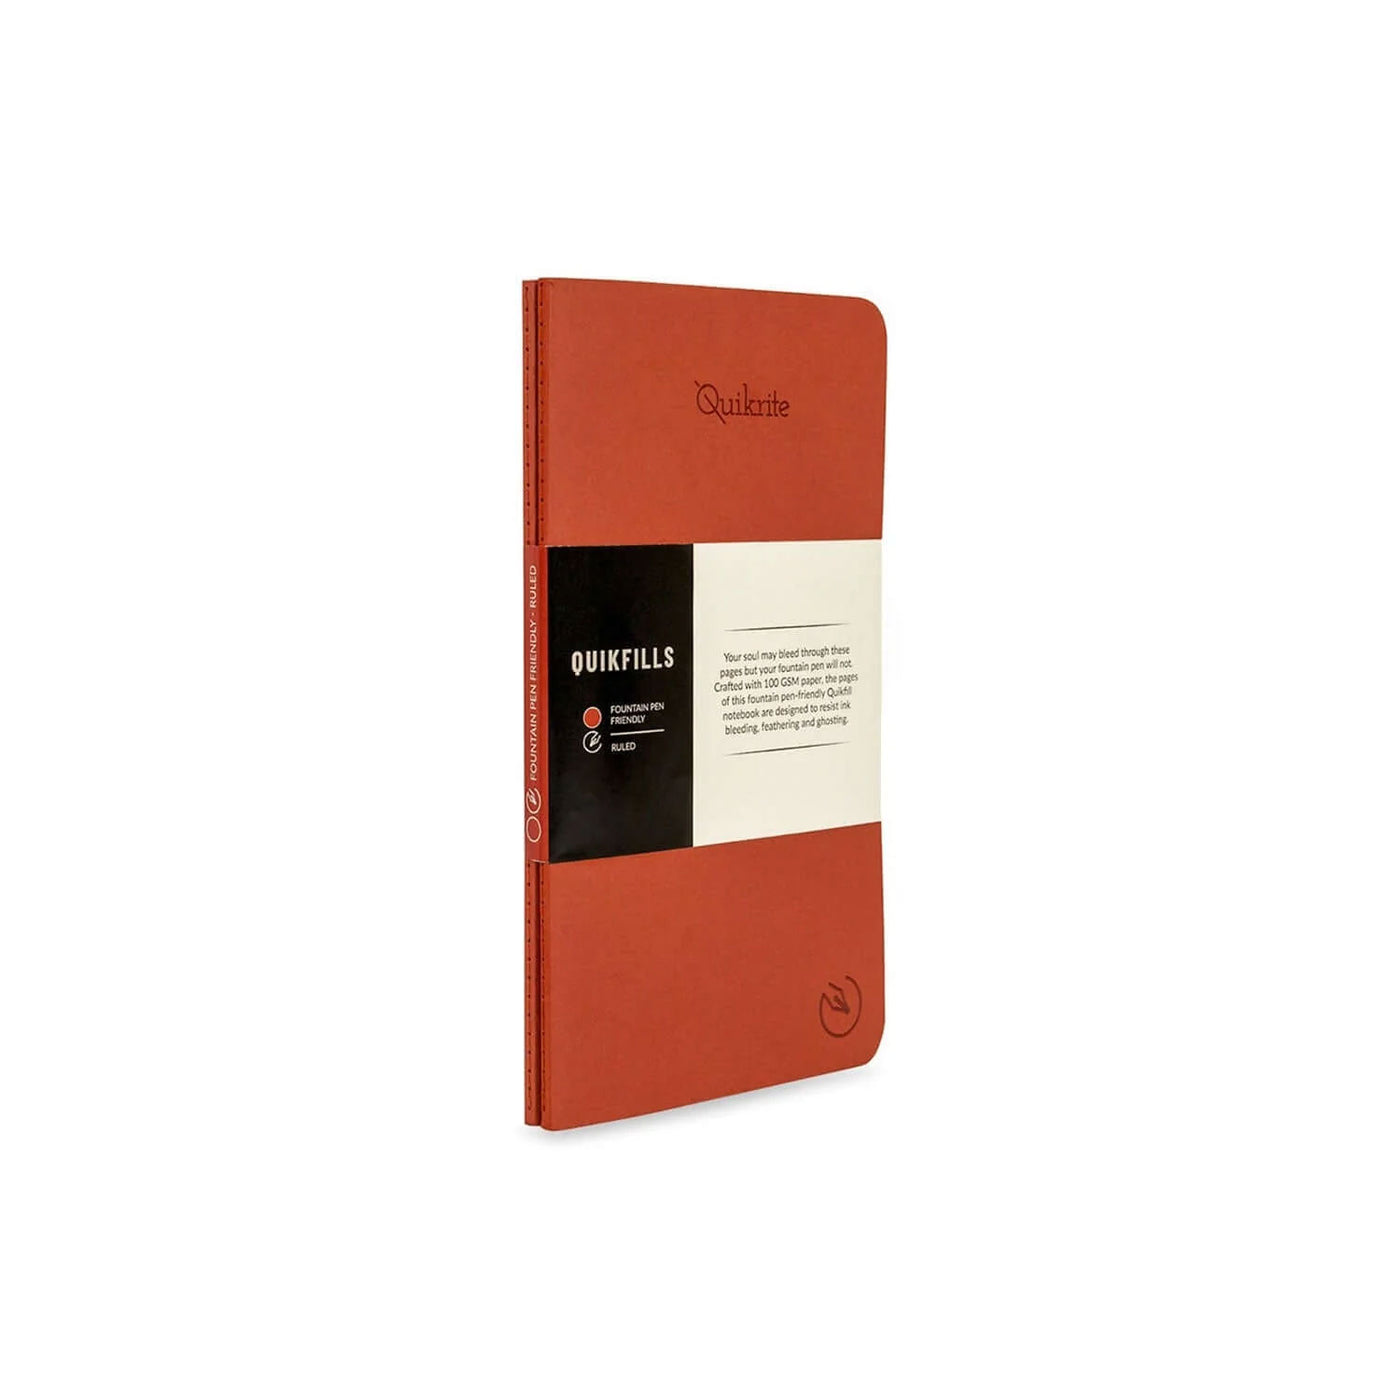 Pennline Quikfill Notebook Refill For Quikrite, Rust - Set Of 2 2